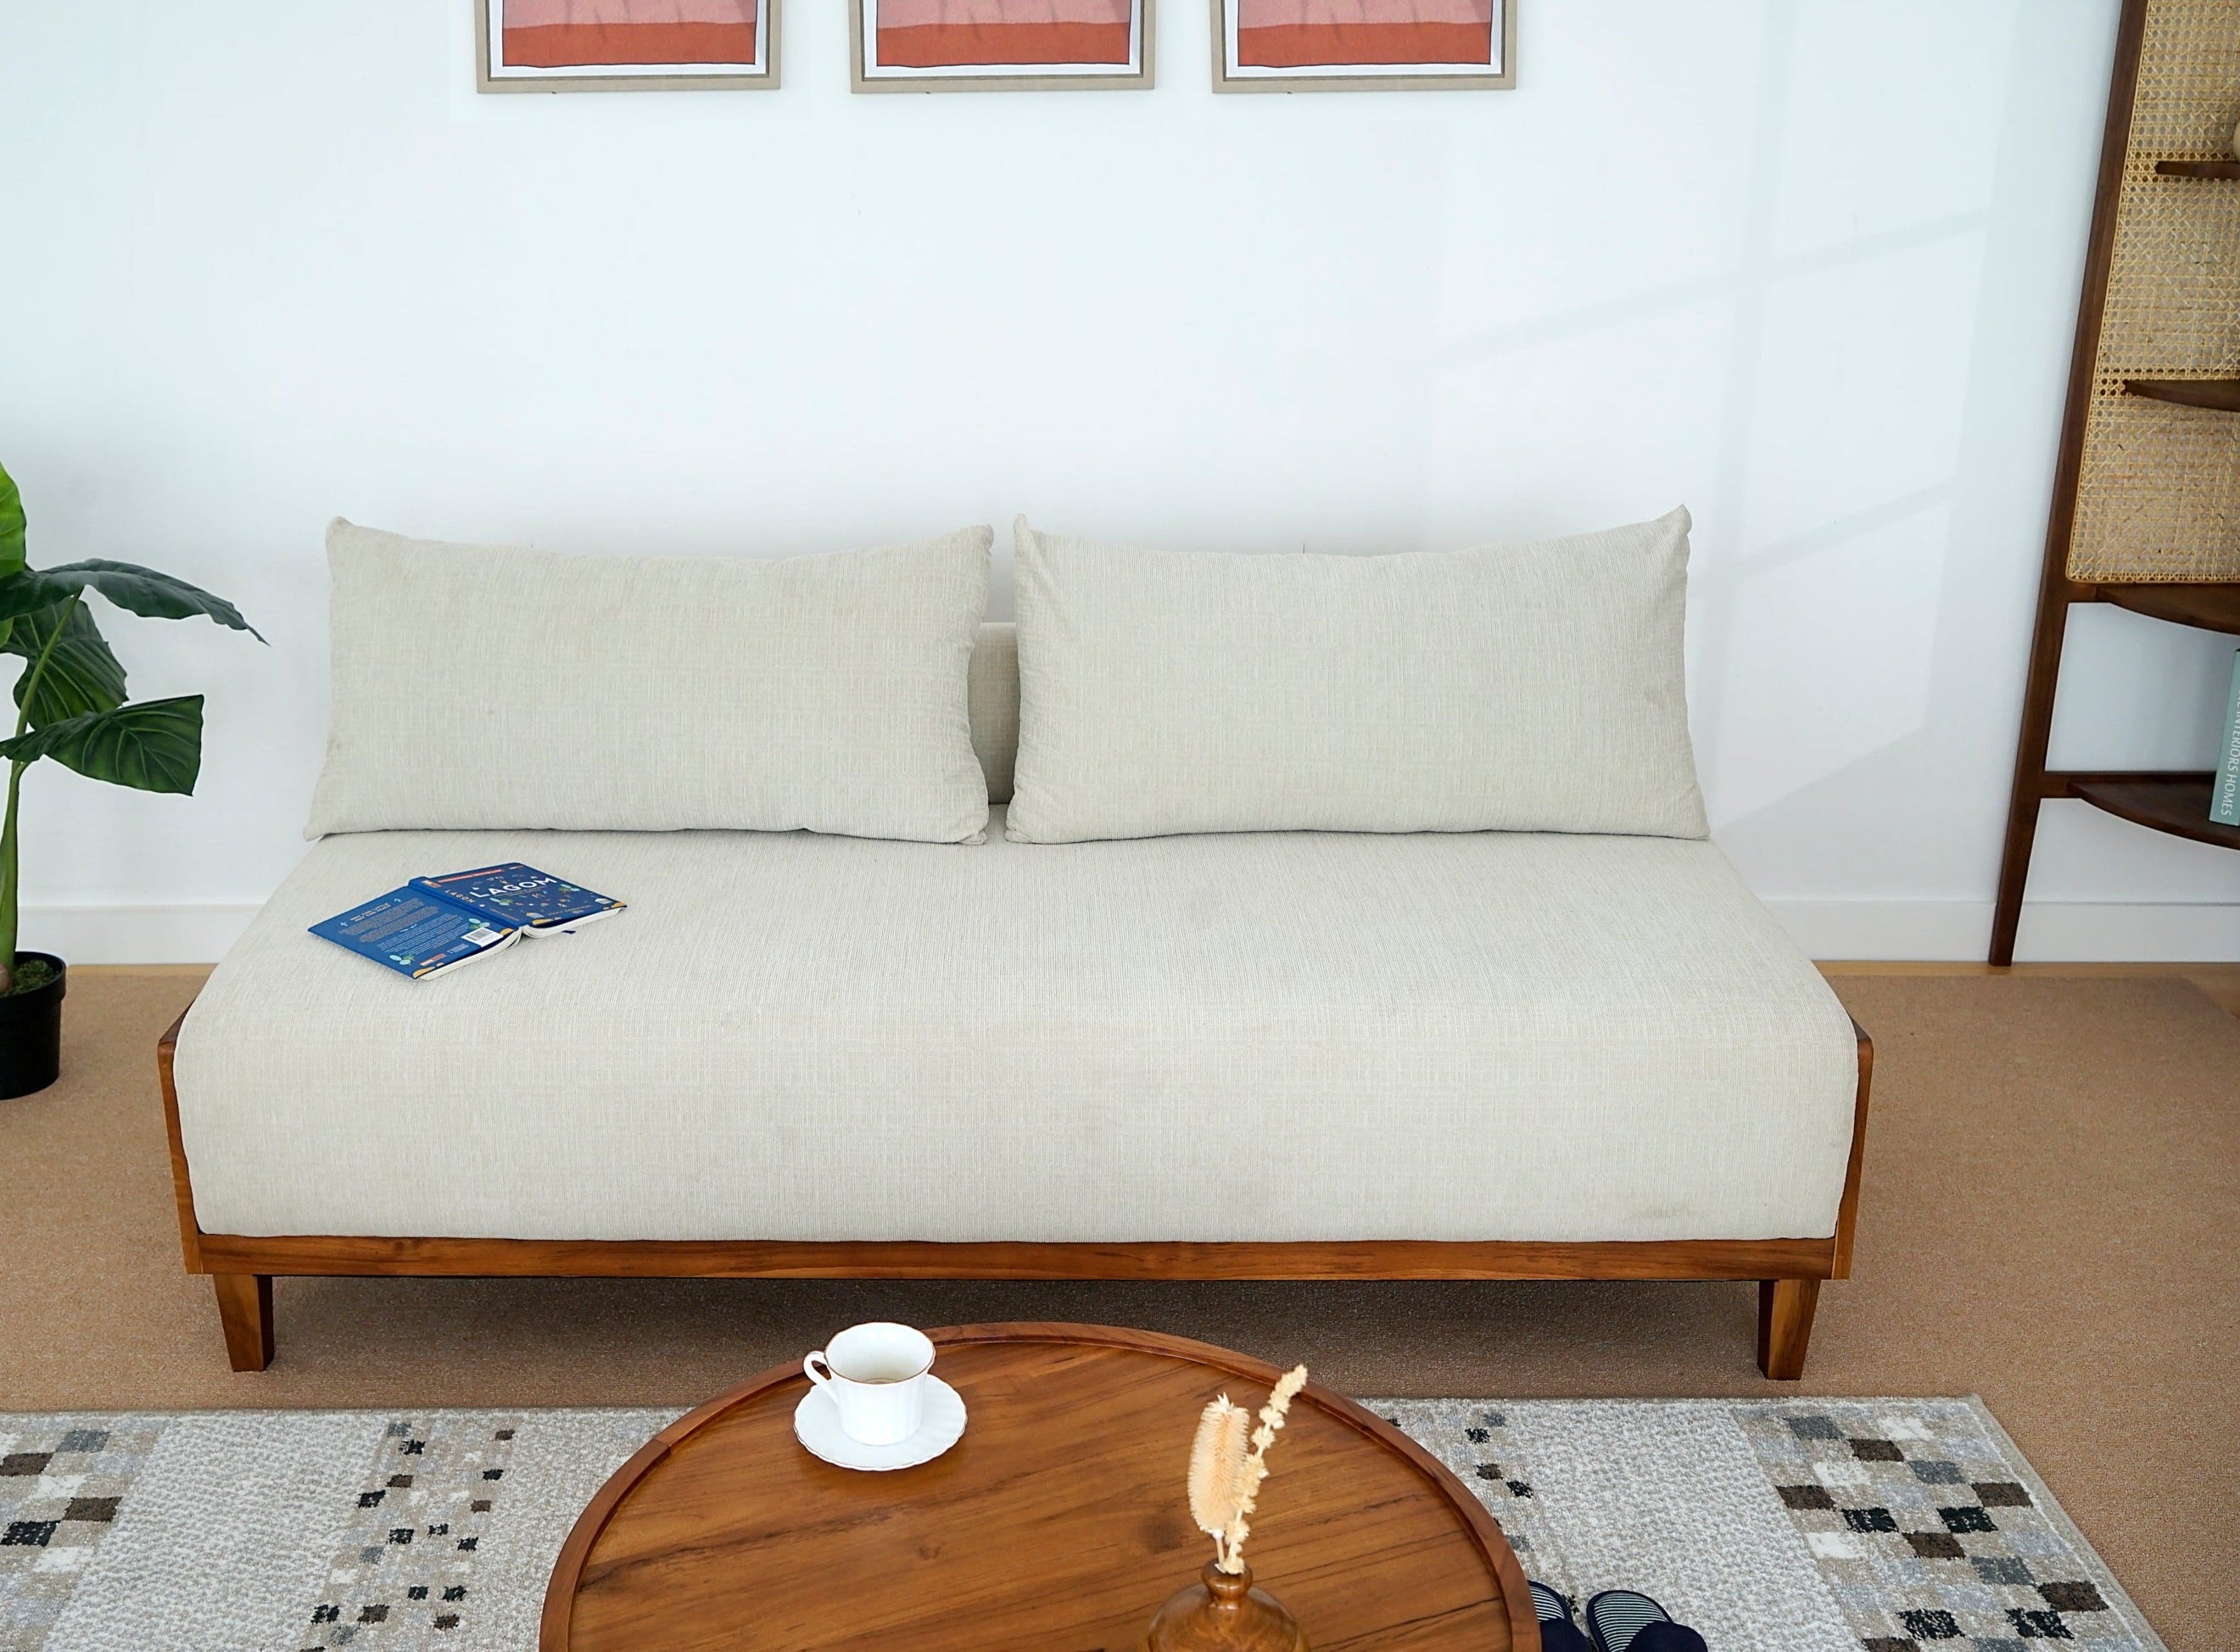 Sofa Bed Multifungsi Customizable Sofa Lagom Home Store Jati Furnitur Teak Furniture Jakarta